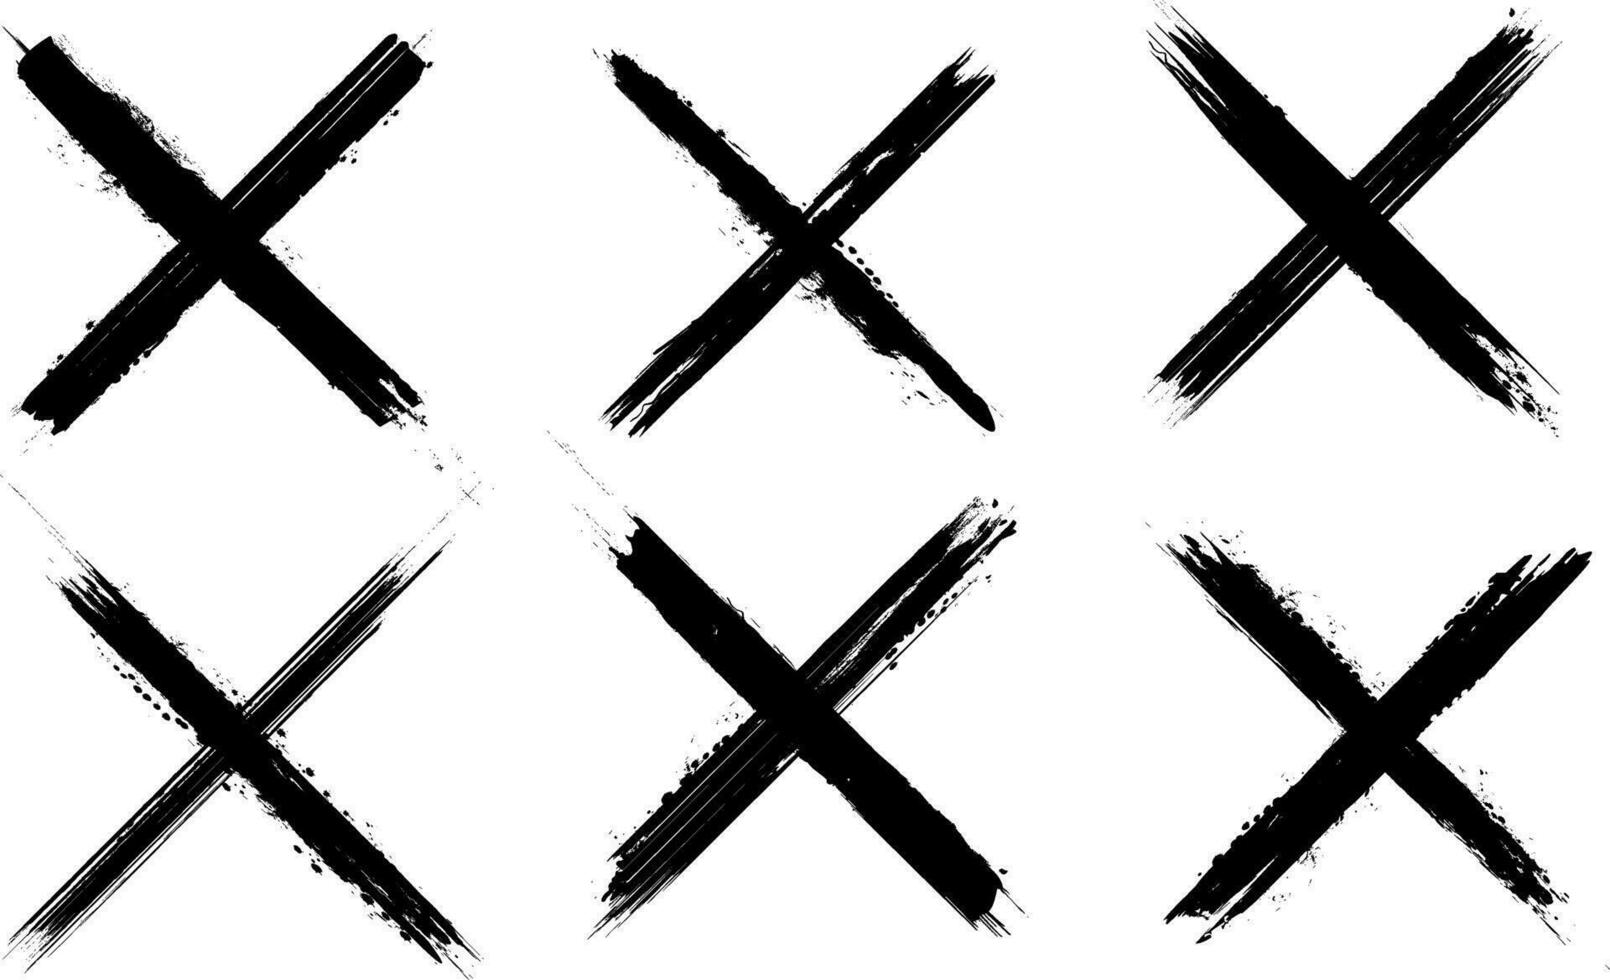 Grunge Vector Brush Stroke X Mark Set with Transparent Background